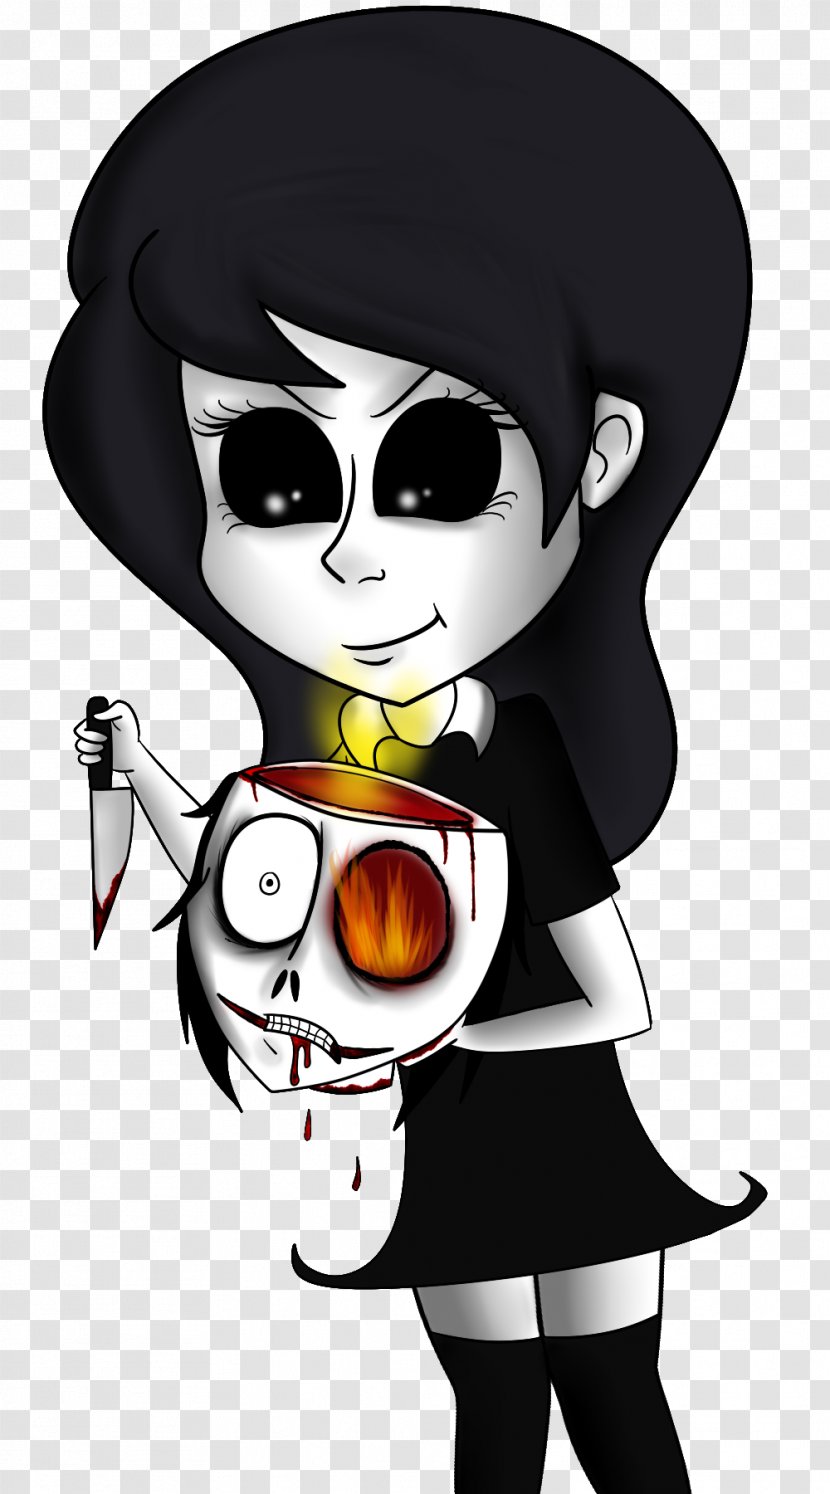 Jeff The Killer Halloween Creepypasta Jack-o'-lantern - Drawing Transparent PNG